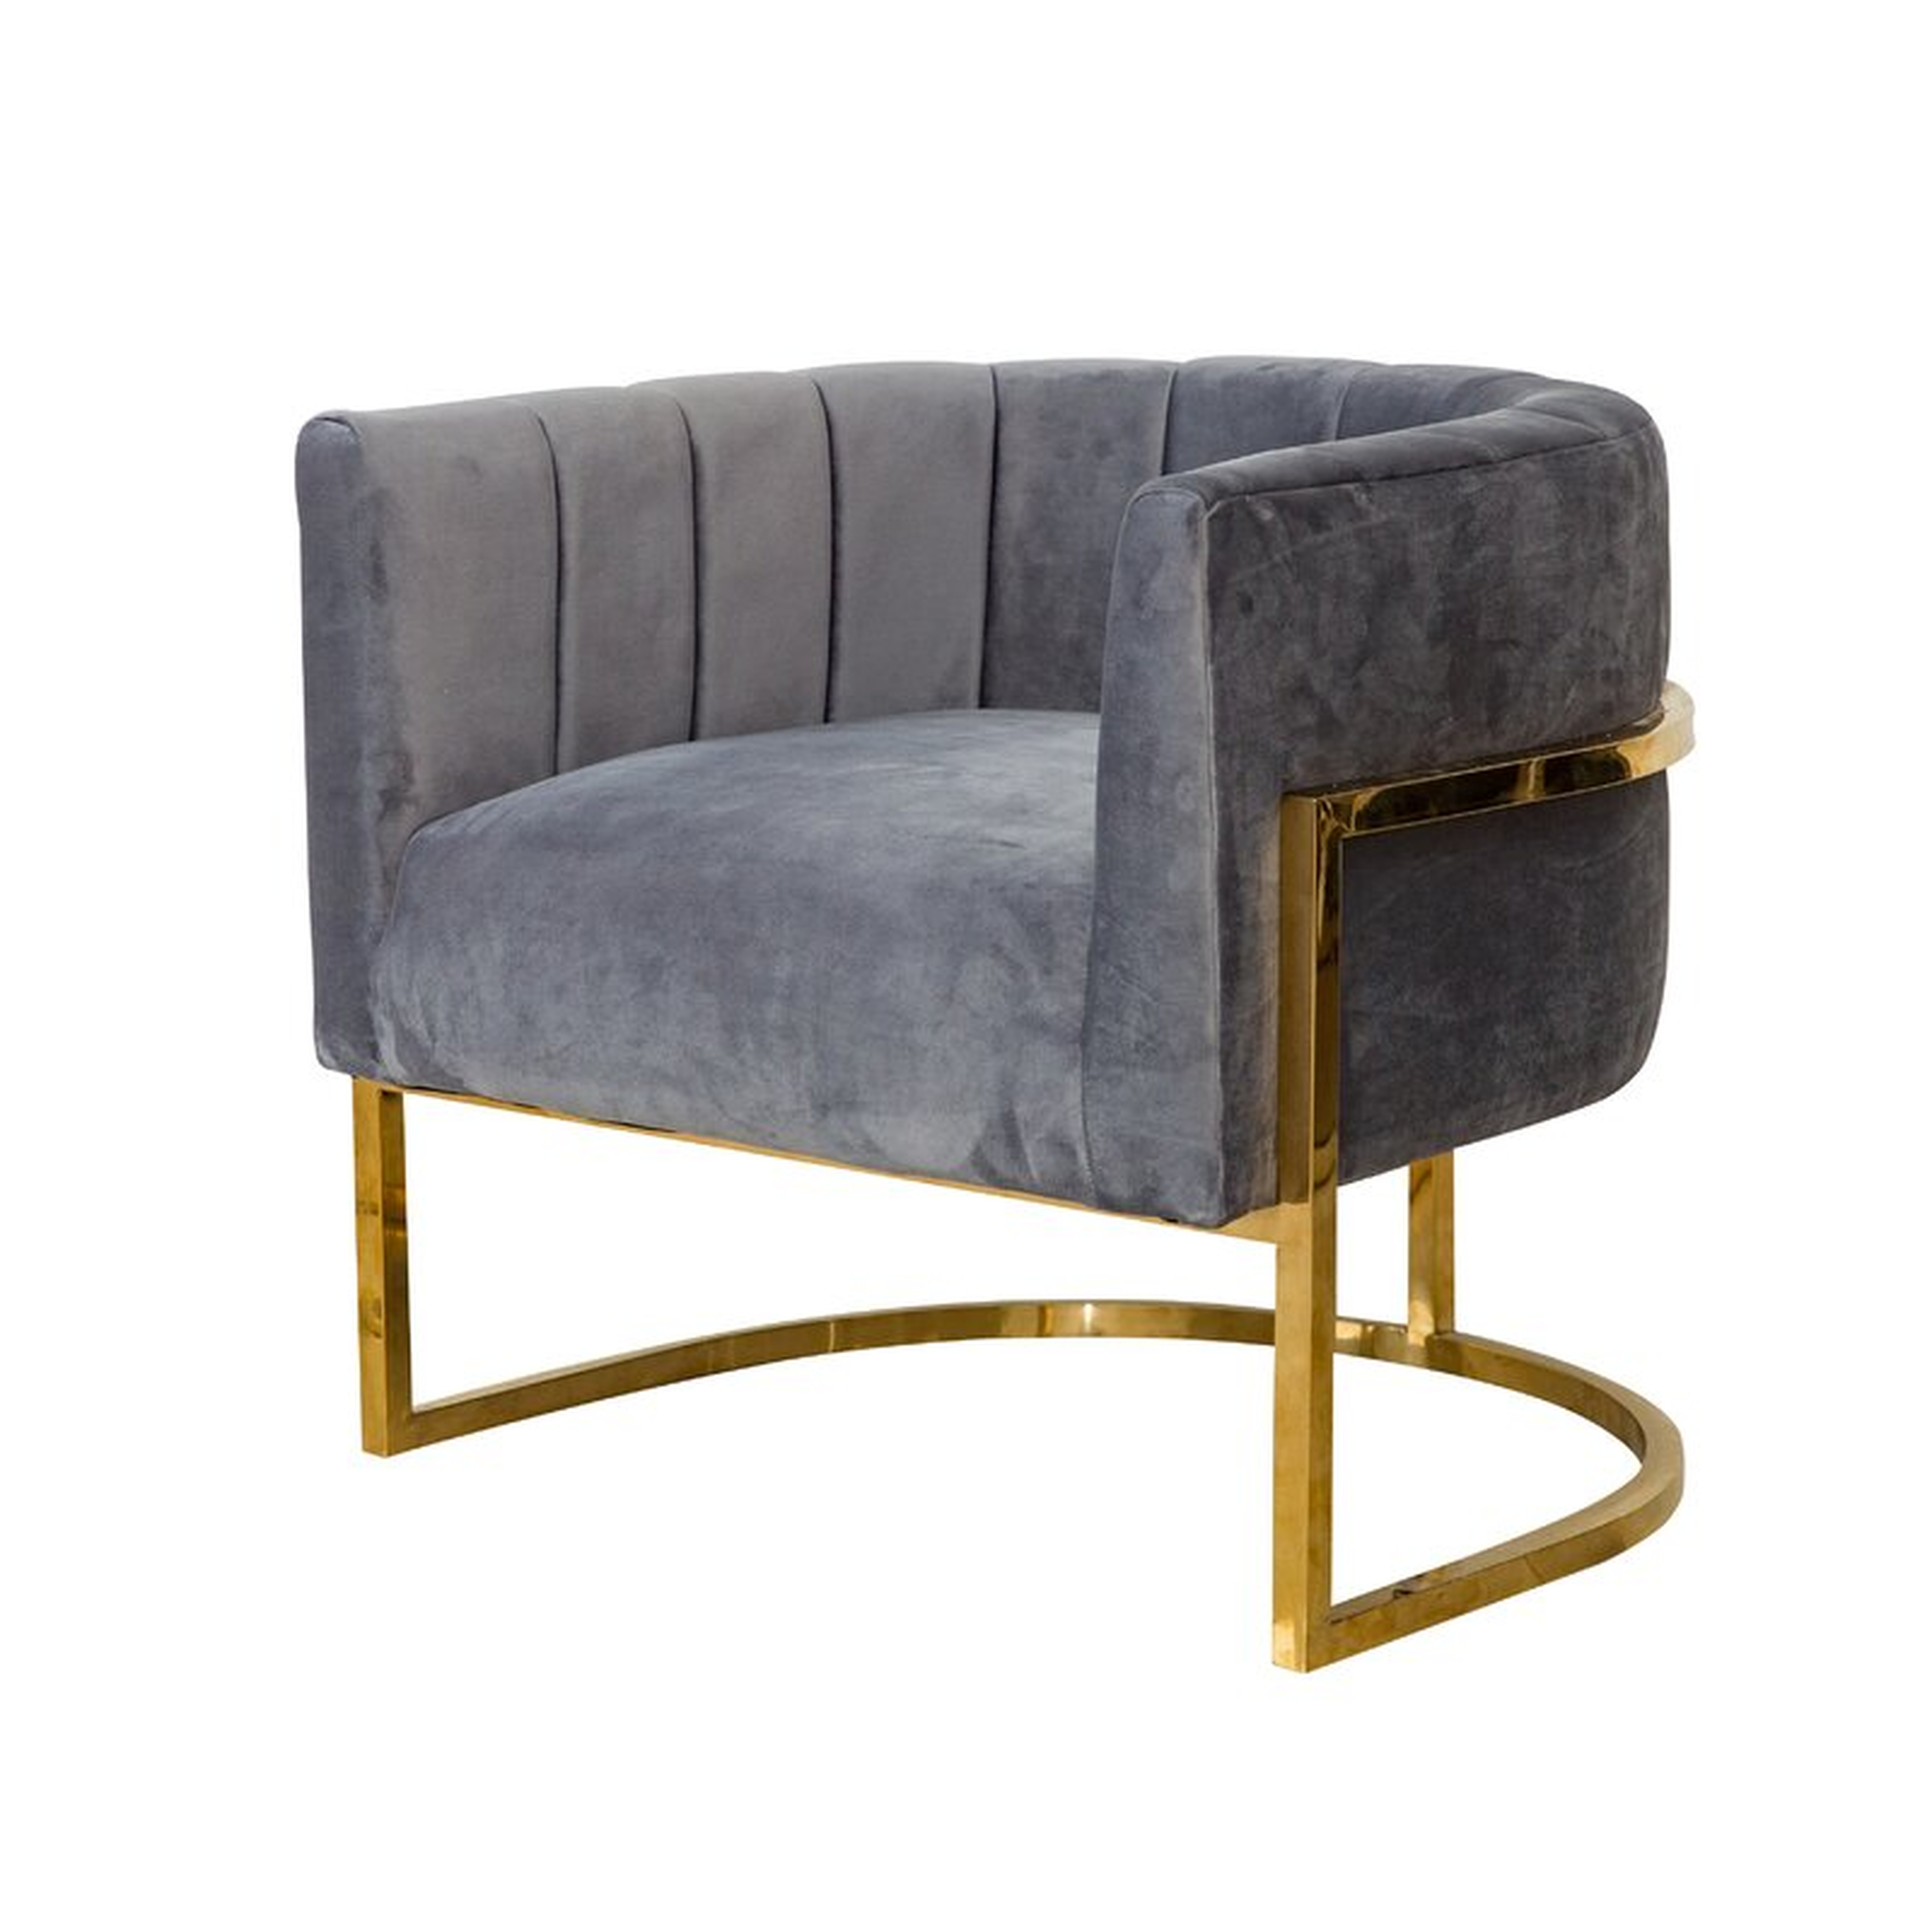 Delmonte Lounge Chair, Gray - Wayfair